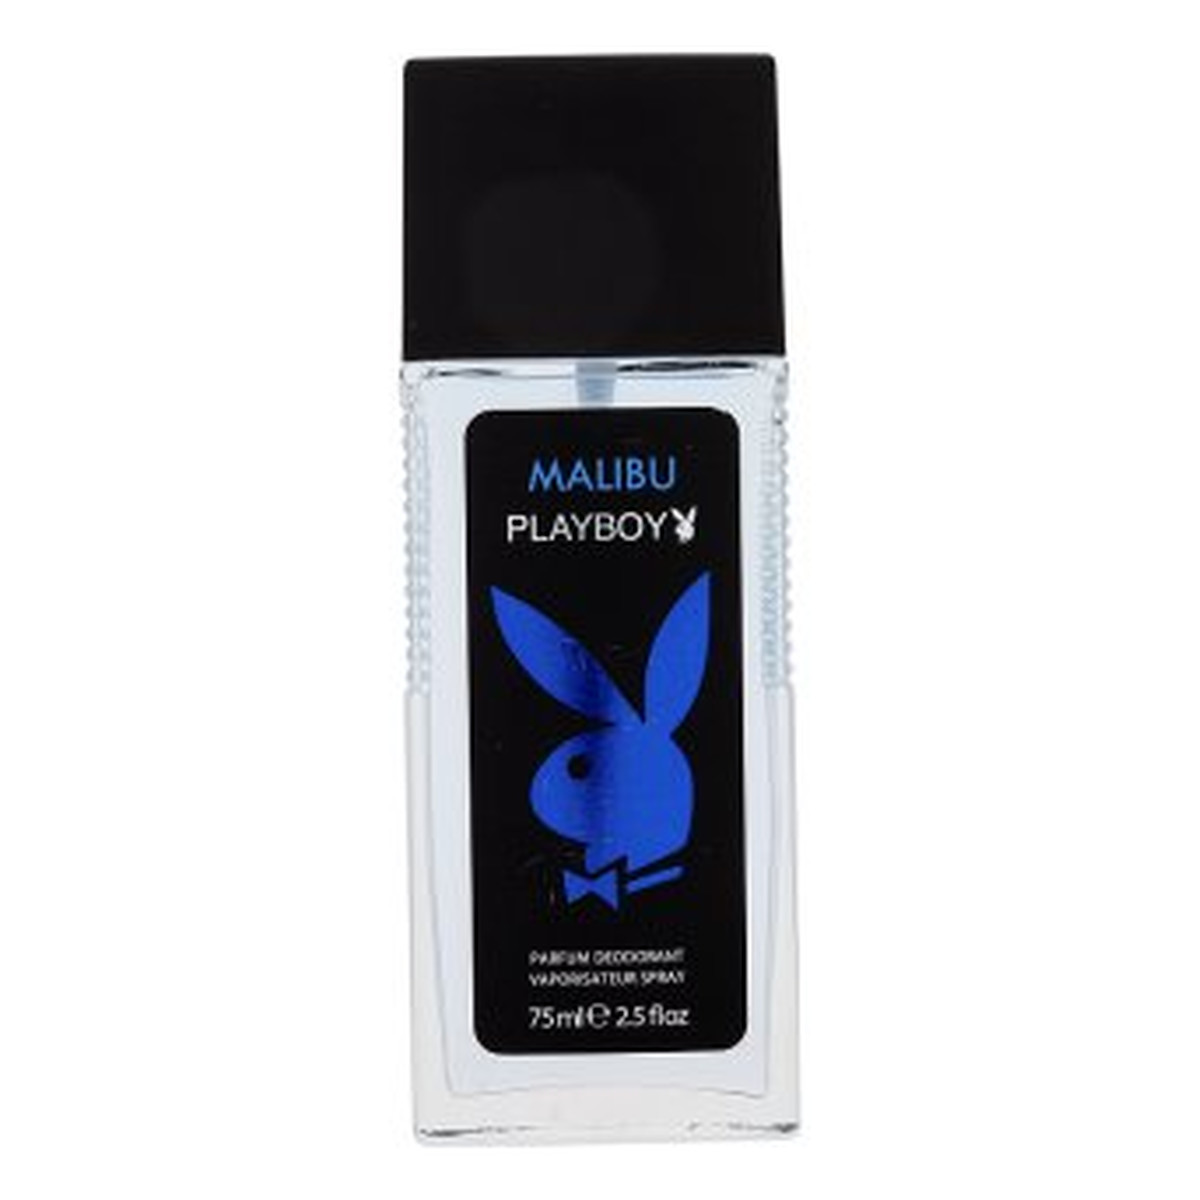 Playboy Malibu Dezodorant Spray 75ml